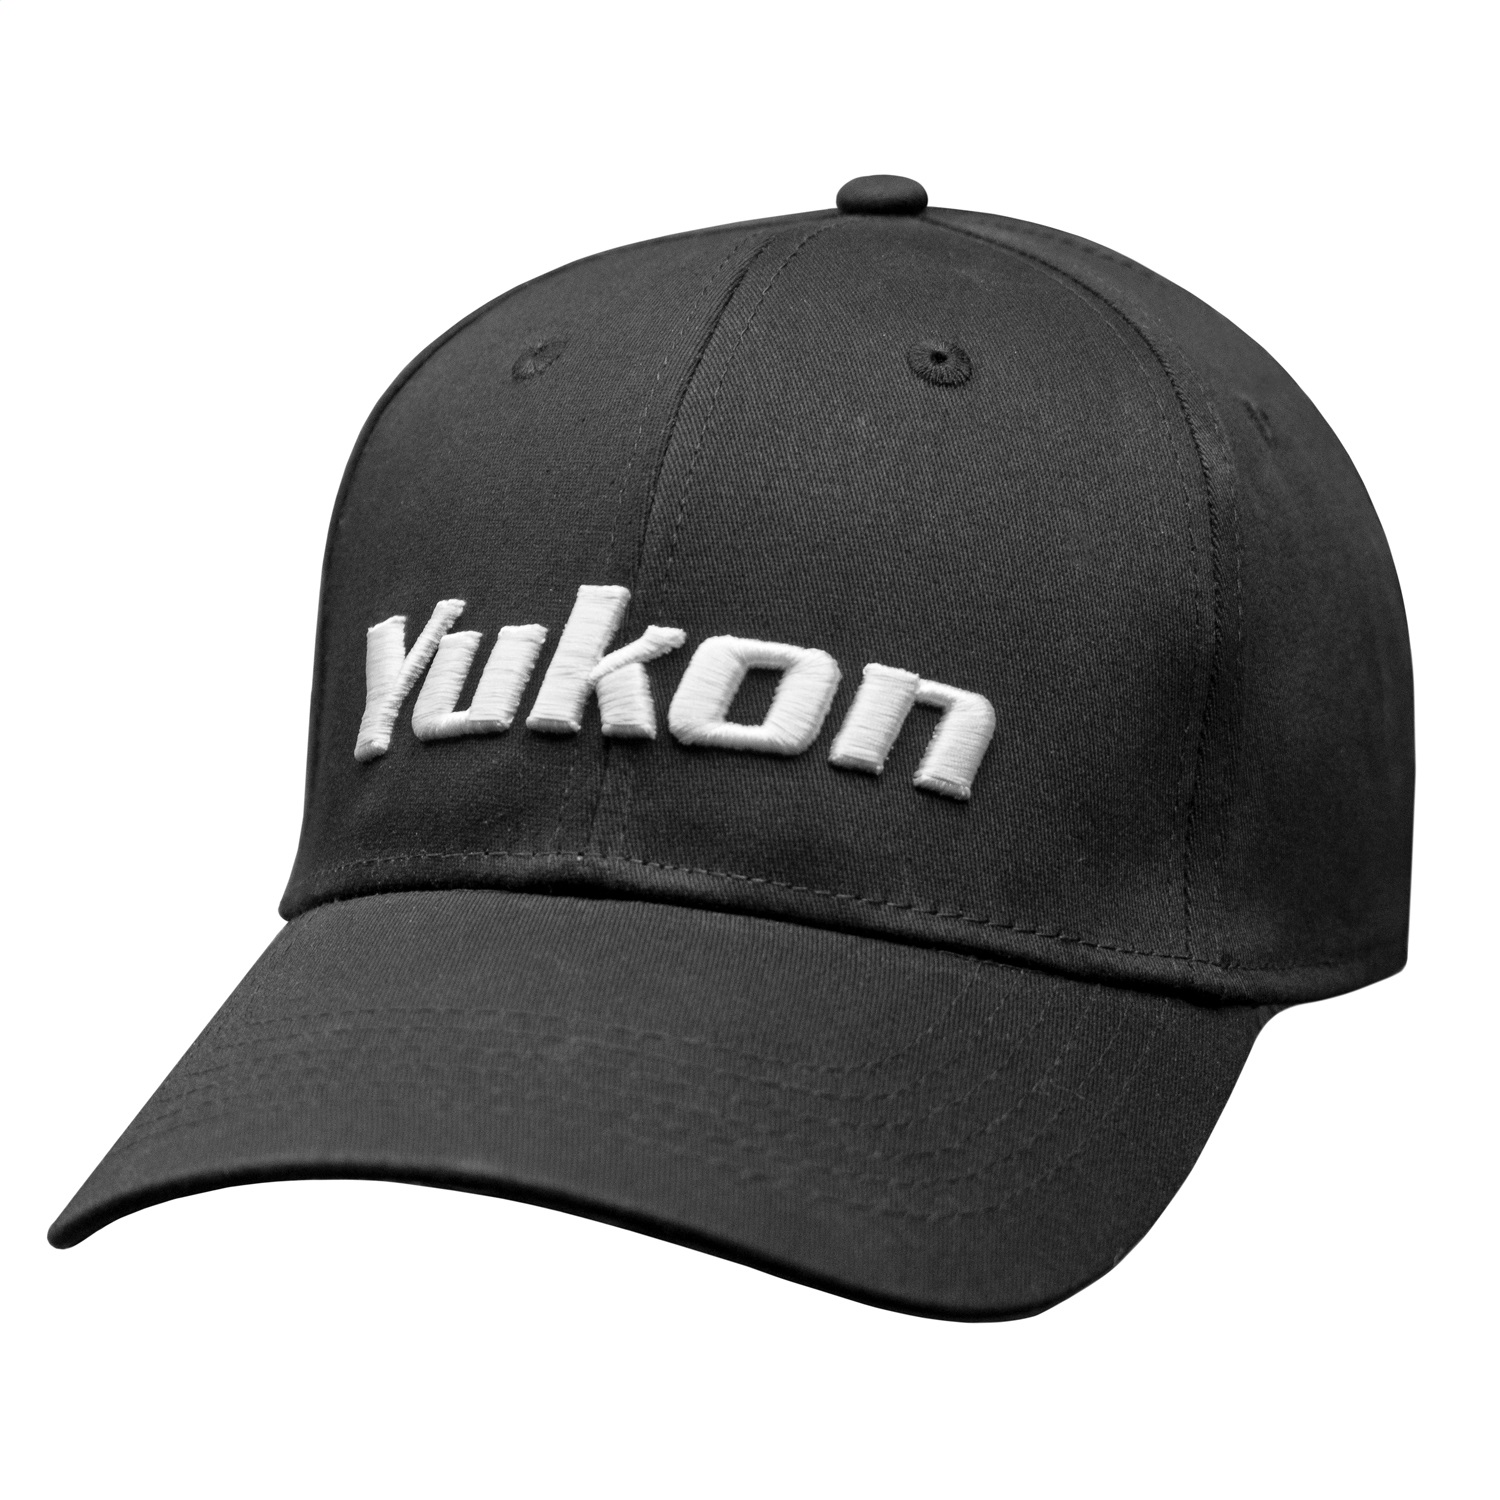 Yukon Gear & Axle YCWHAT-11 Yukon Baseball Cap